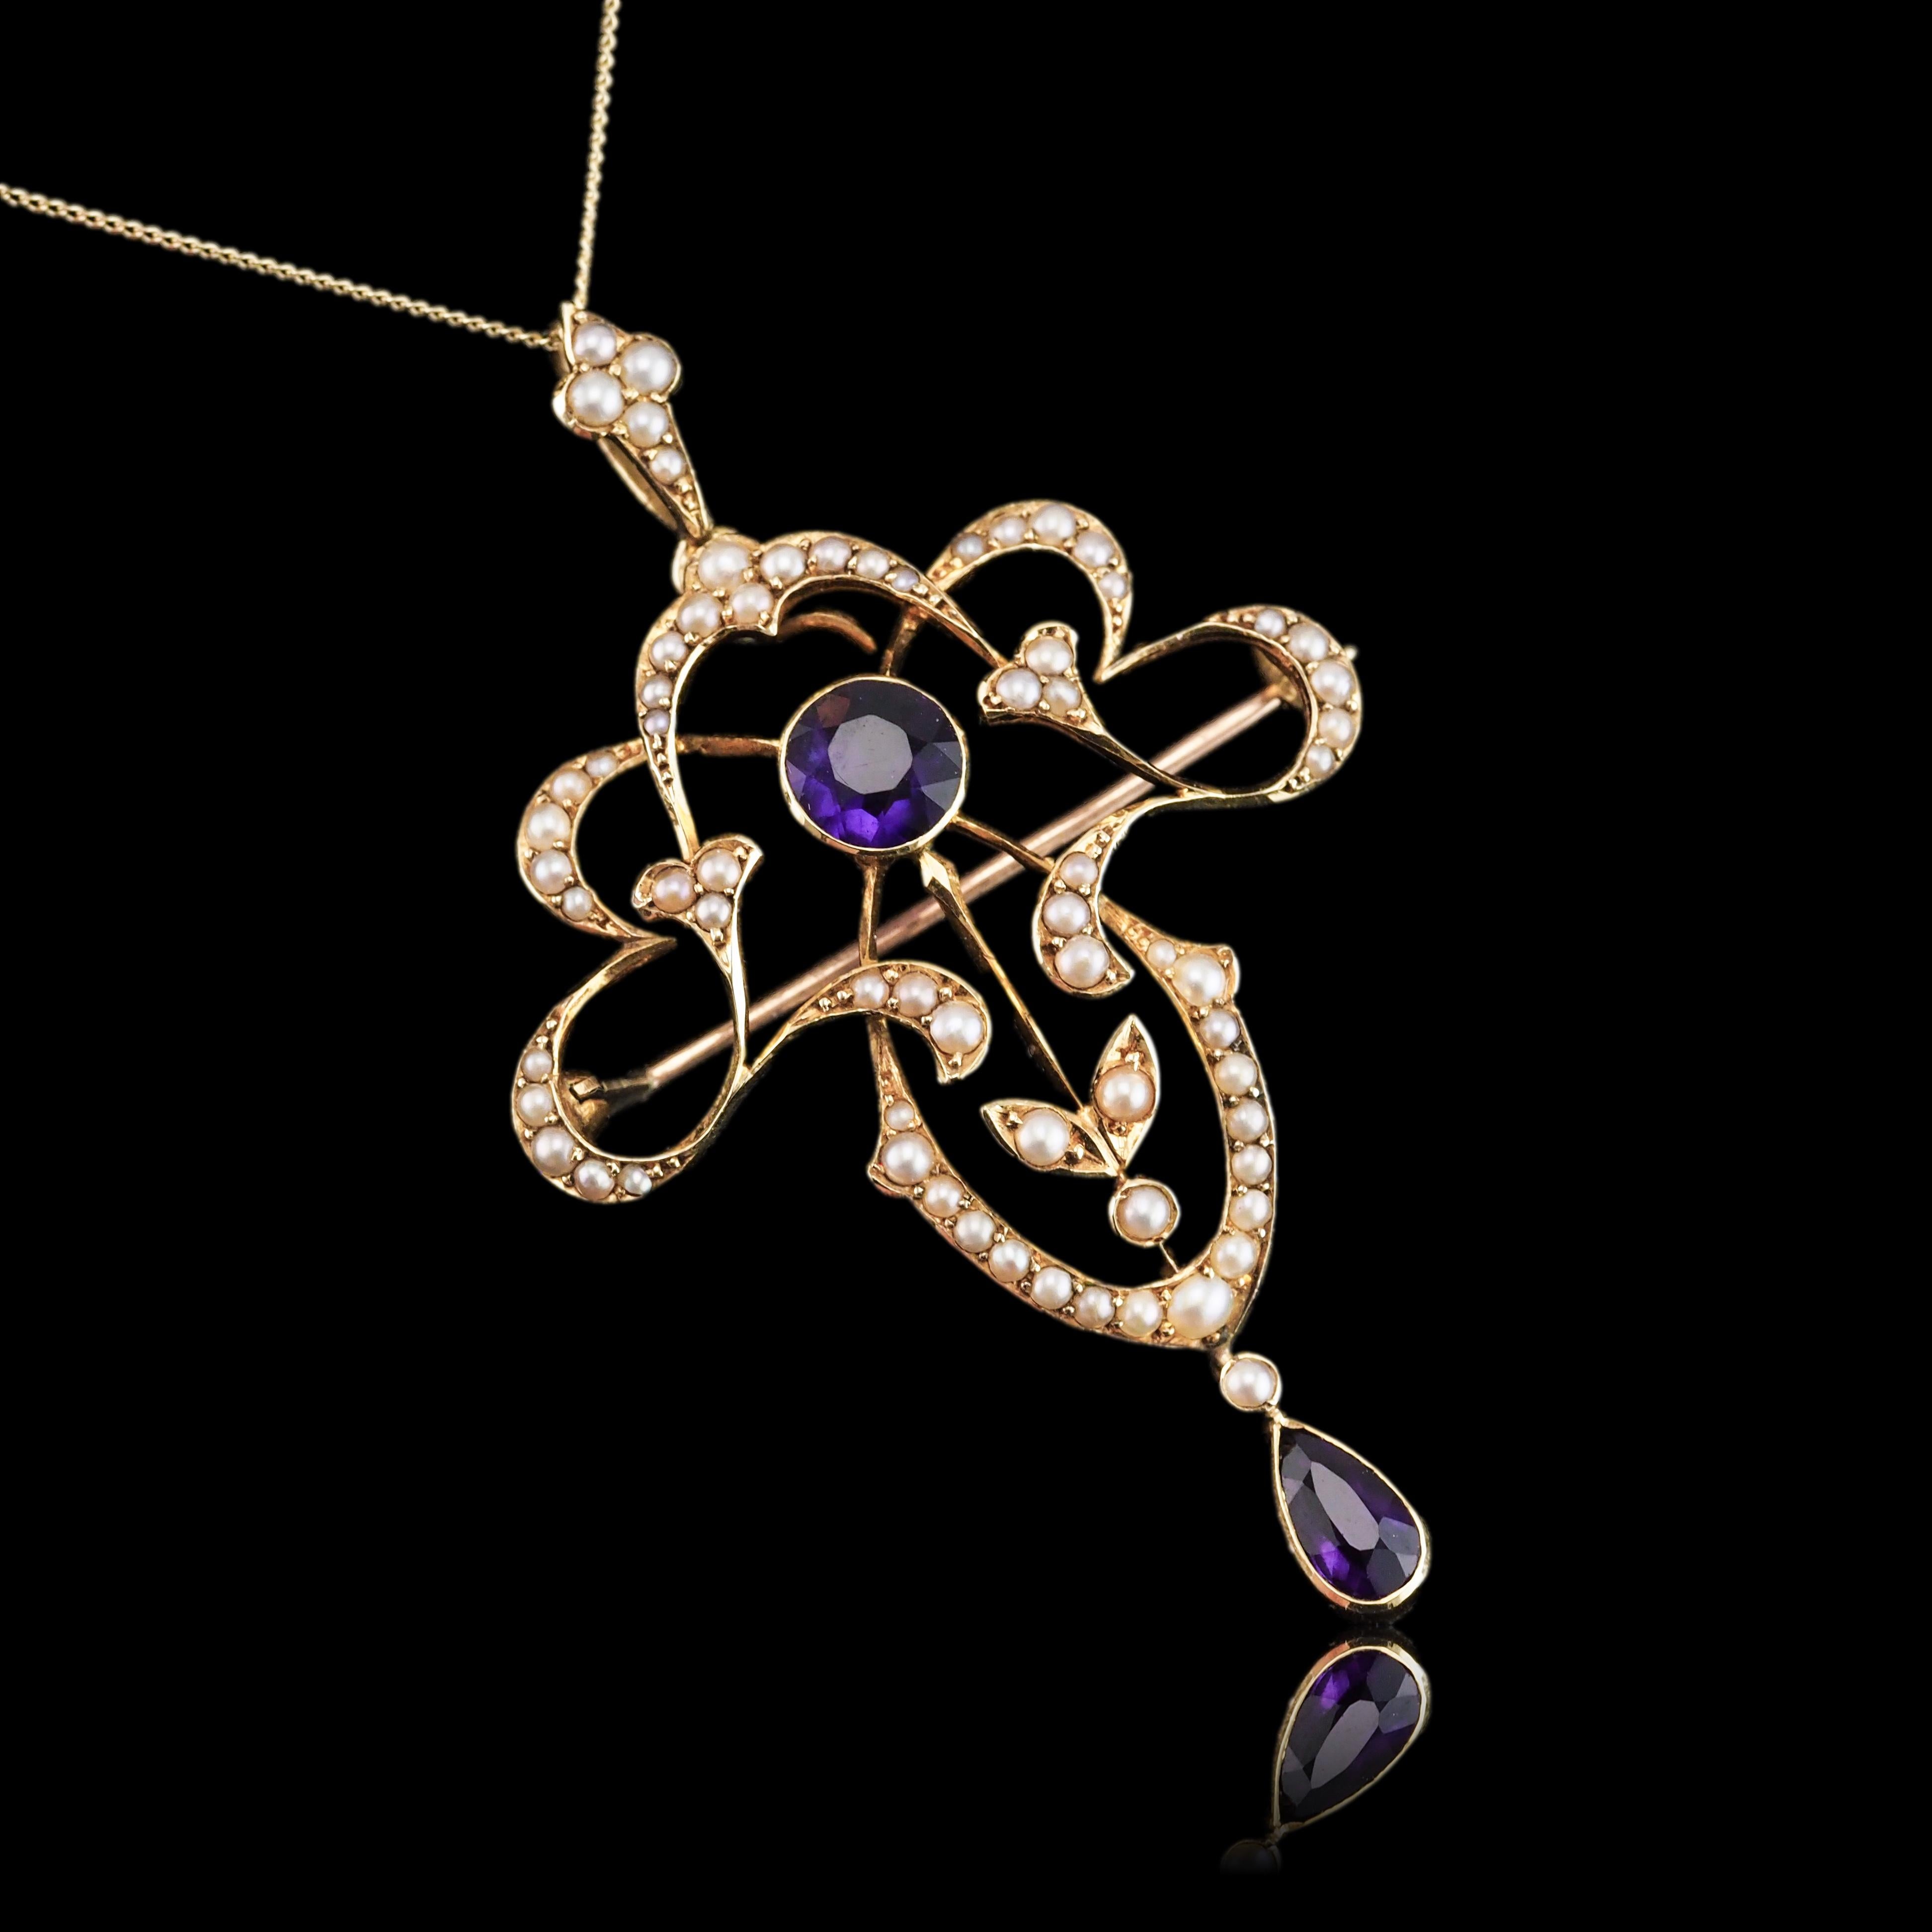 Antique Edwardian Amethyst & Seed Pearl 15K Gold Pendant Necklace Art Nouveau  For Sale 12